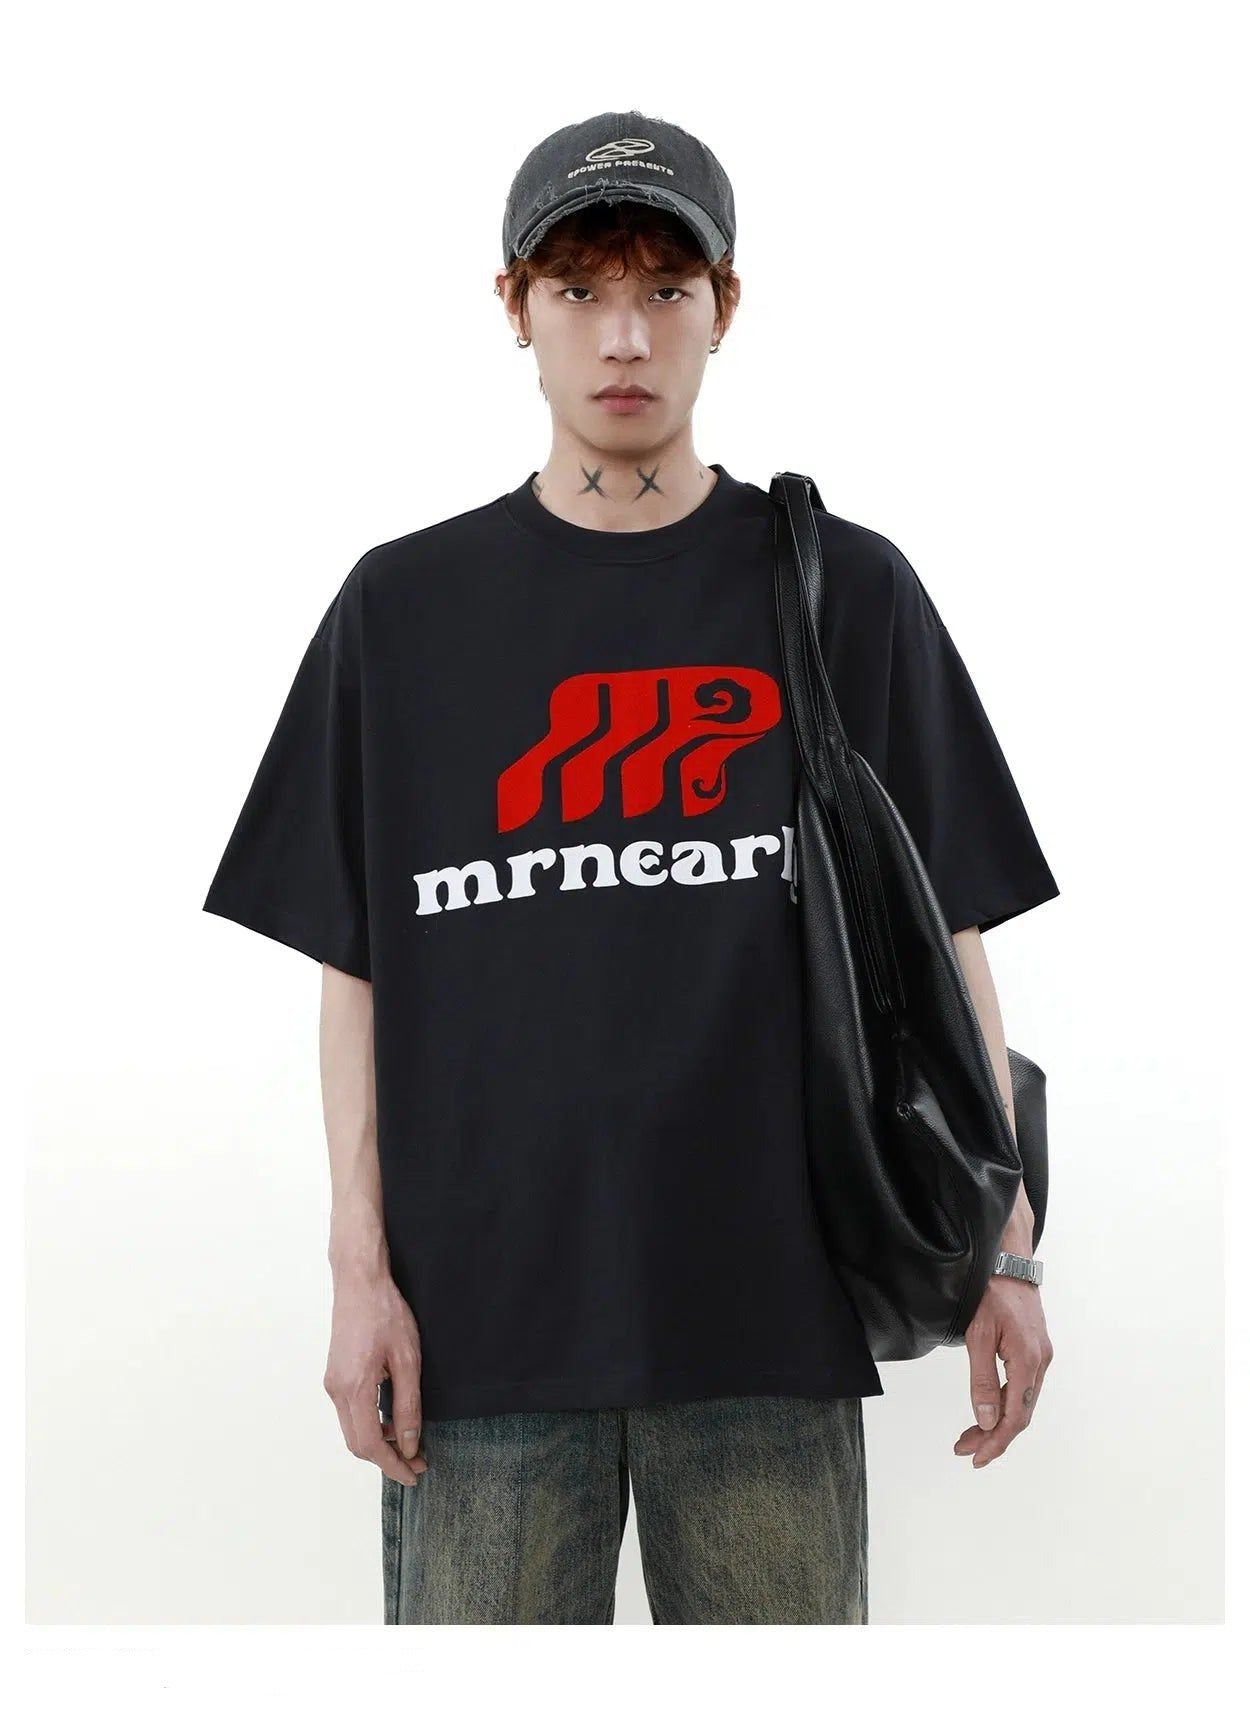 Basic Logo Print T-Shirt Korean Street Fashion T-Shirt By Mr Nearly Shop Online at OH Vault